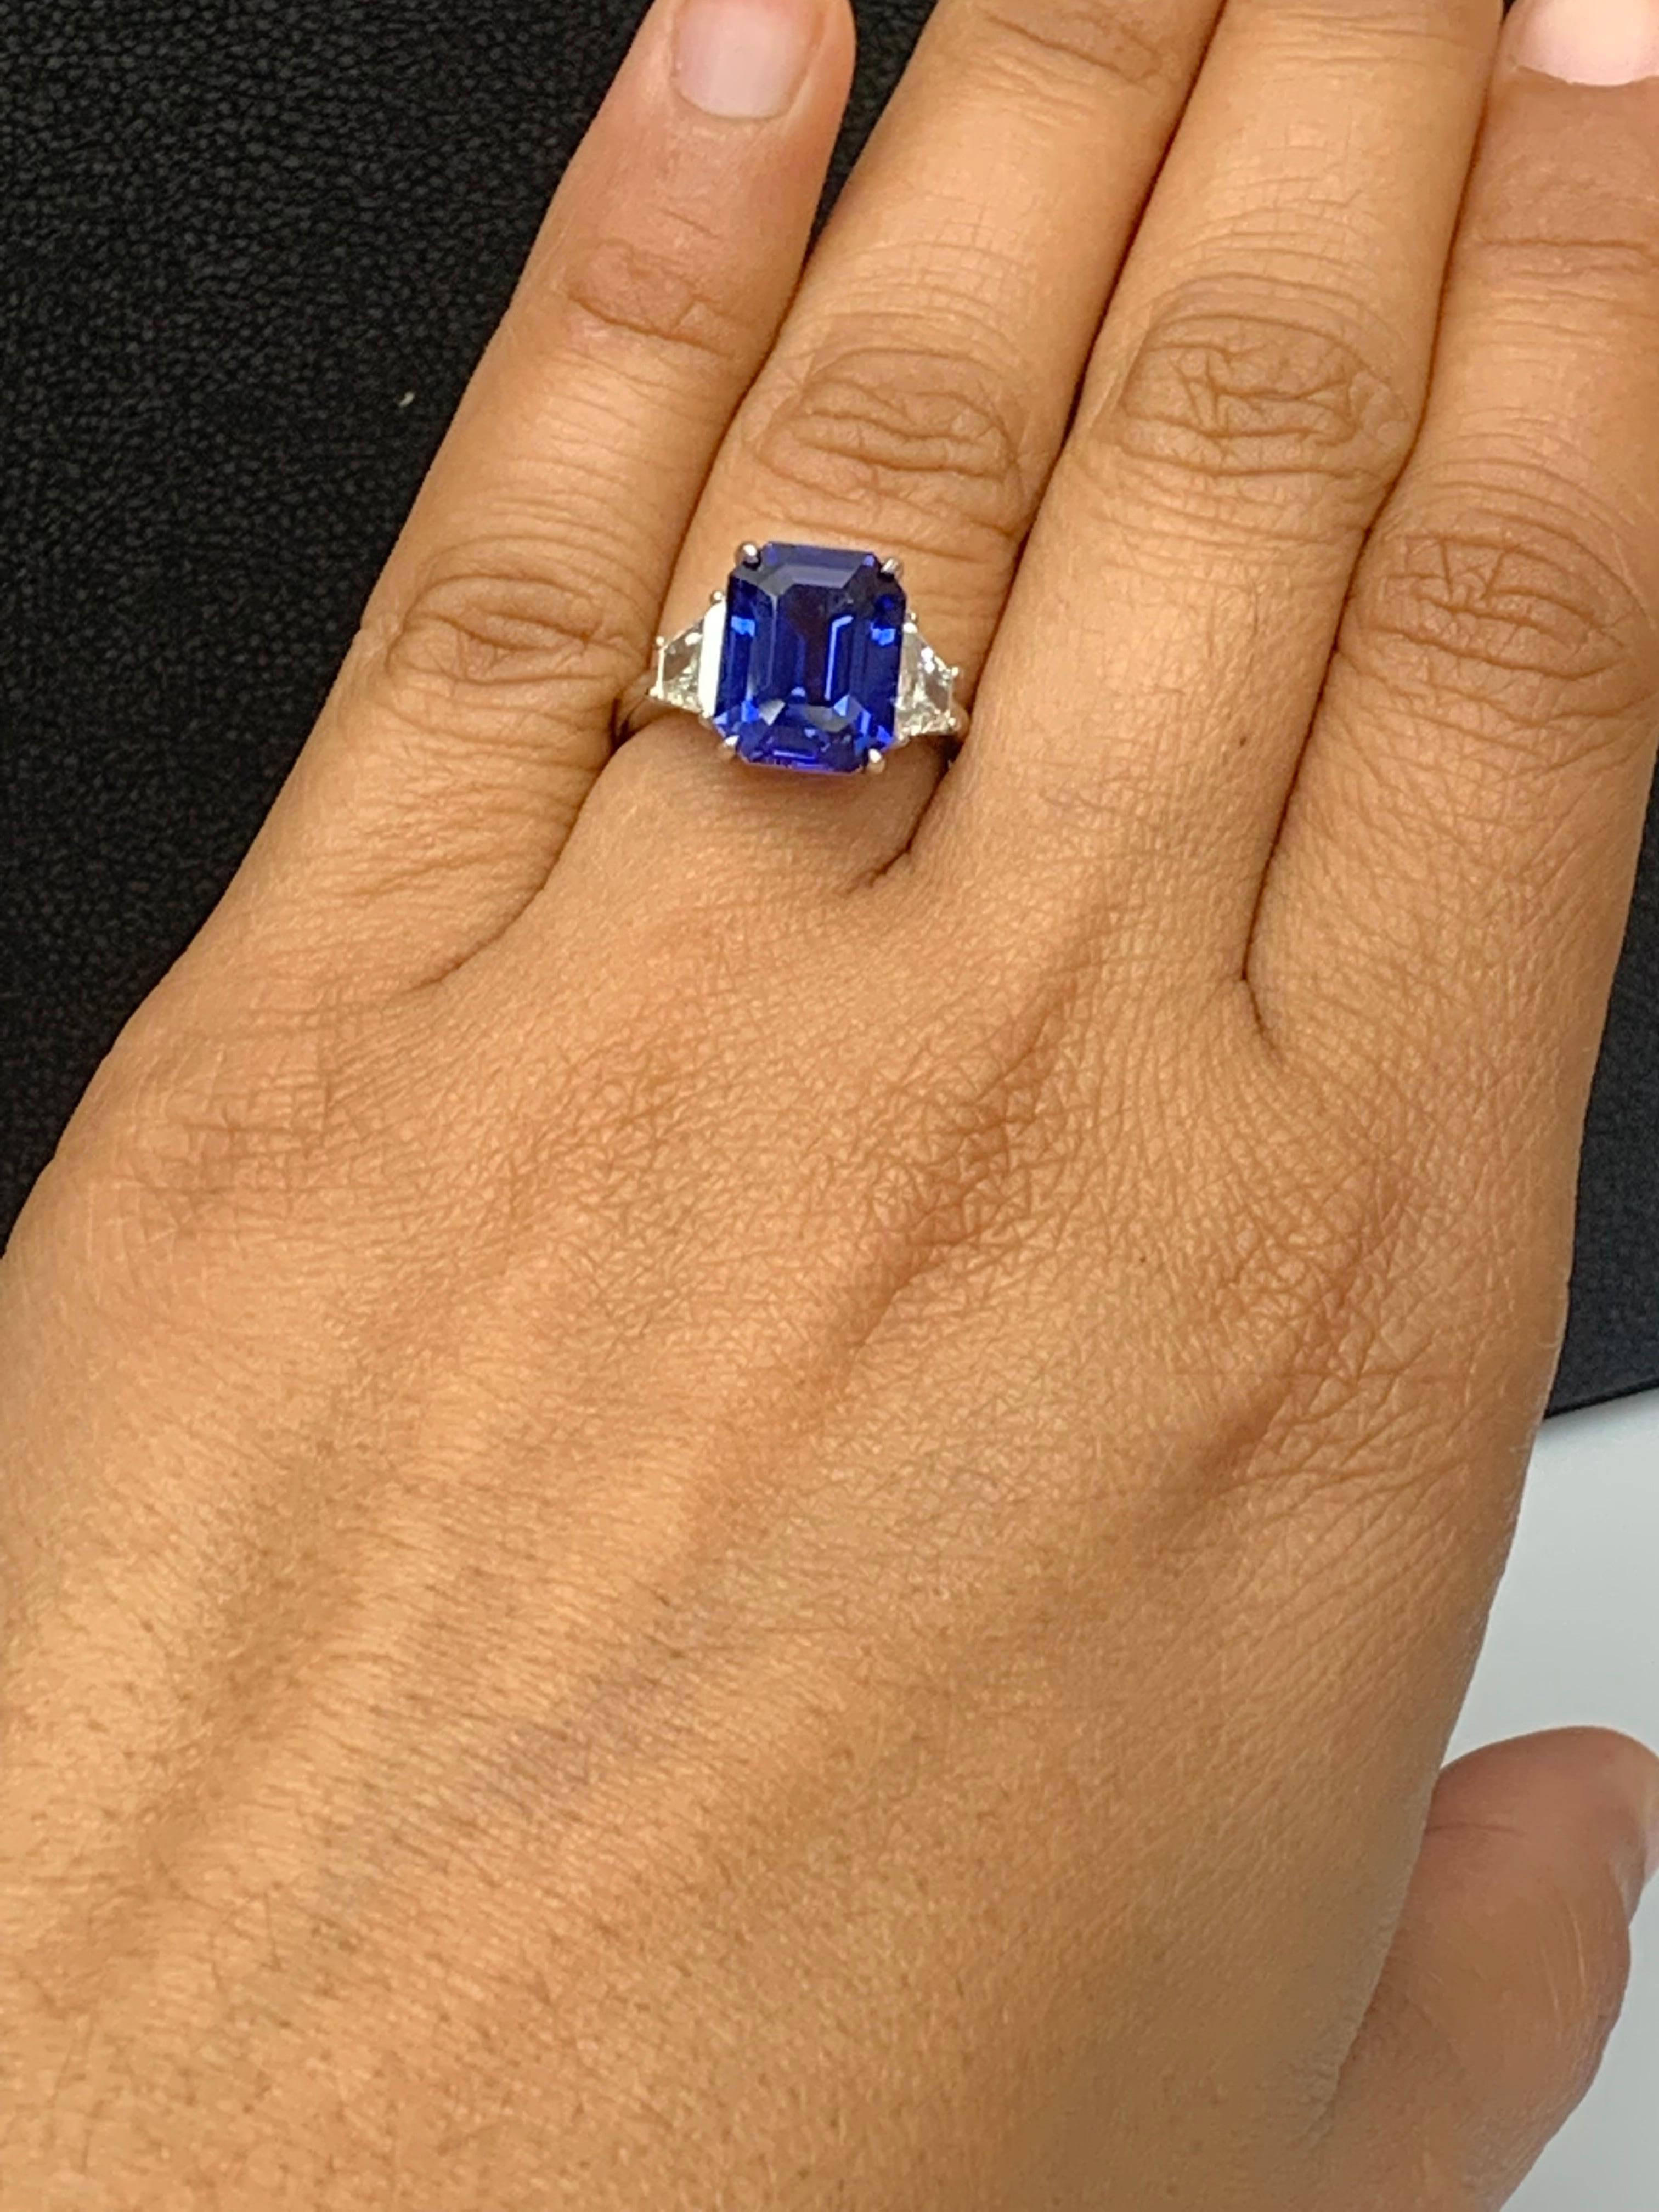 Women's Certified 6.21 Carat Emerald Cut Sapphire & Diamond Engagement Ring in Platinum For Sale